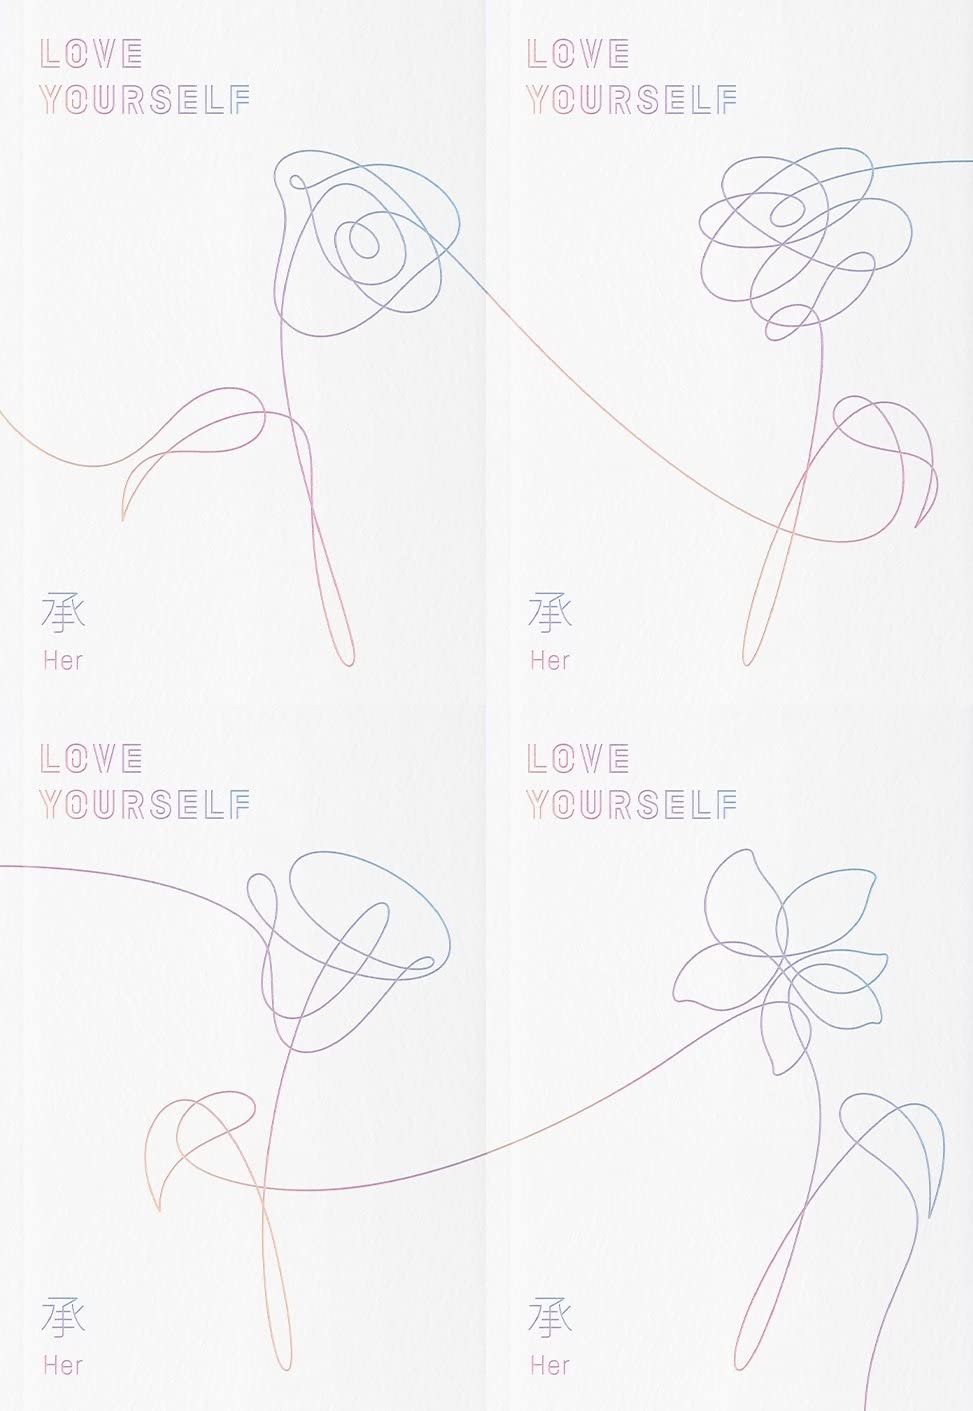 BTS Album - LOVE YOURSELF ? 'Answer' CD - BREAK MUSIC